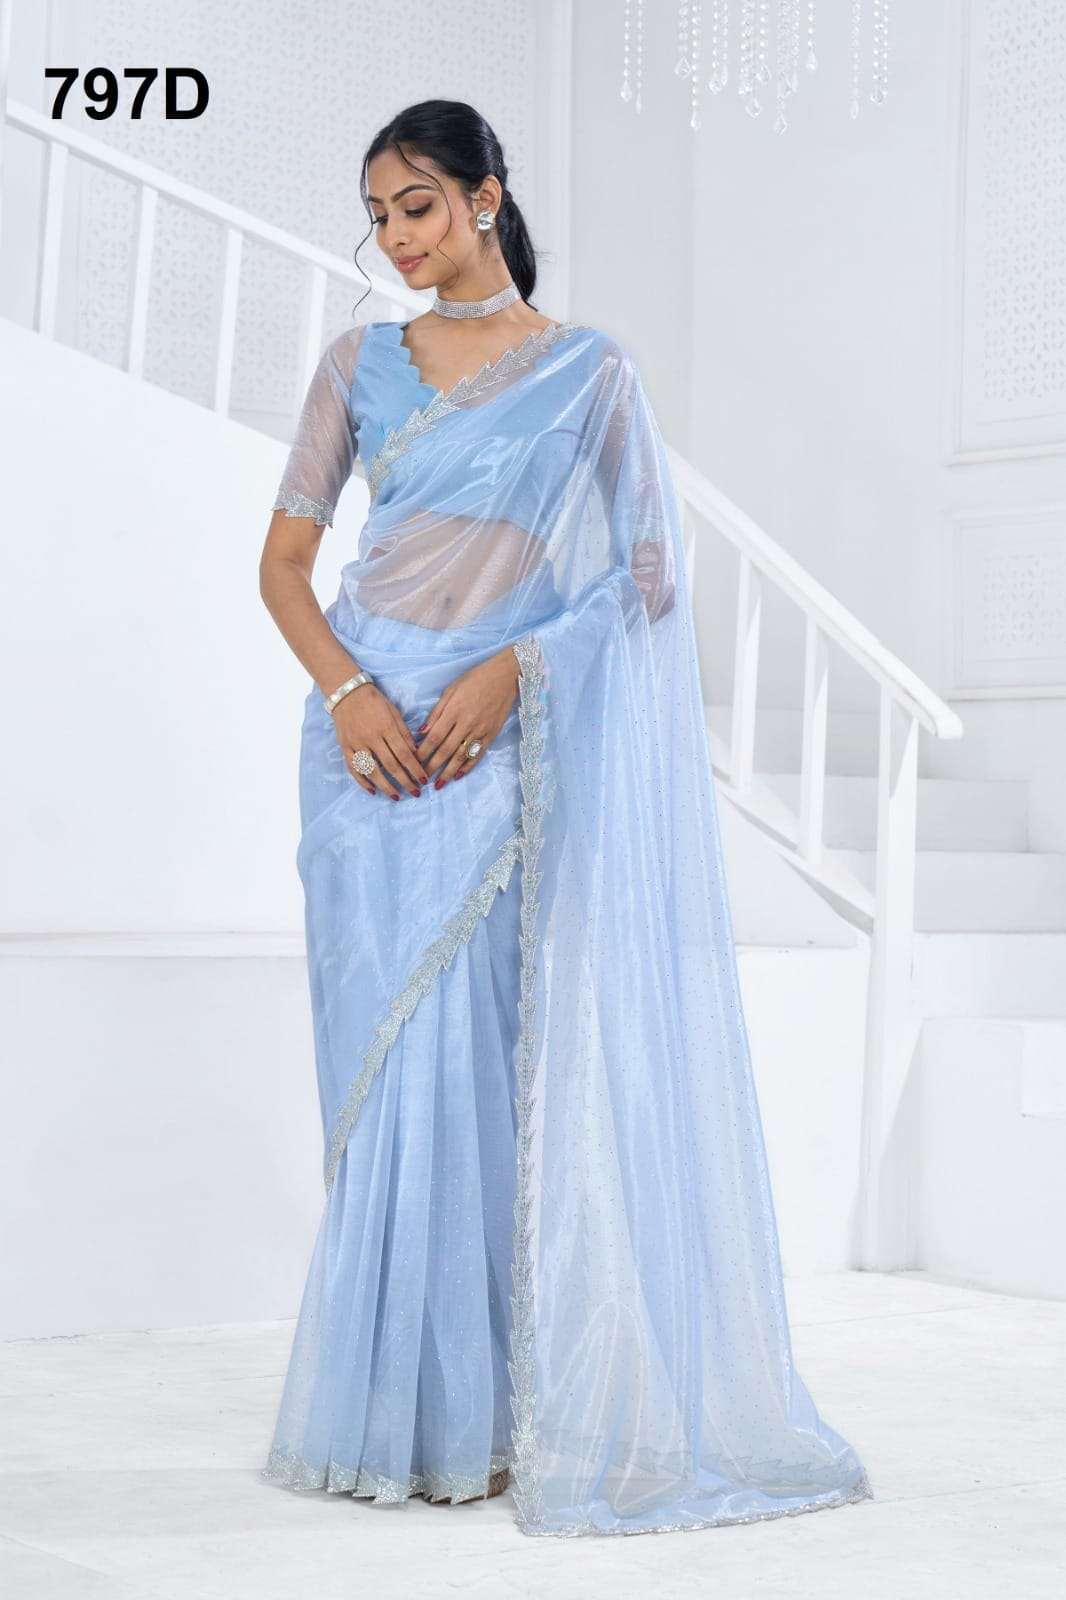 Mehek 797 Colors Party Wear Style Exclusive Latest Designer Saree Online Dealers